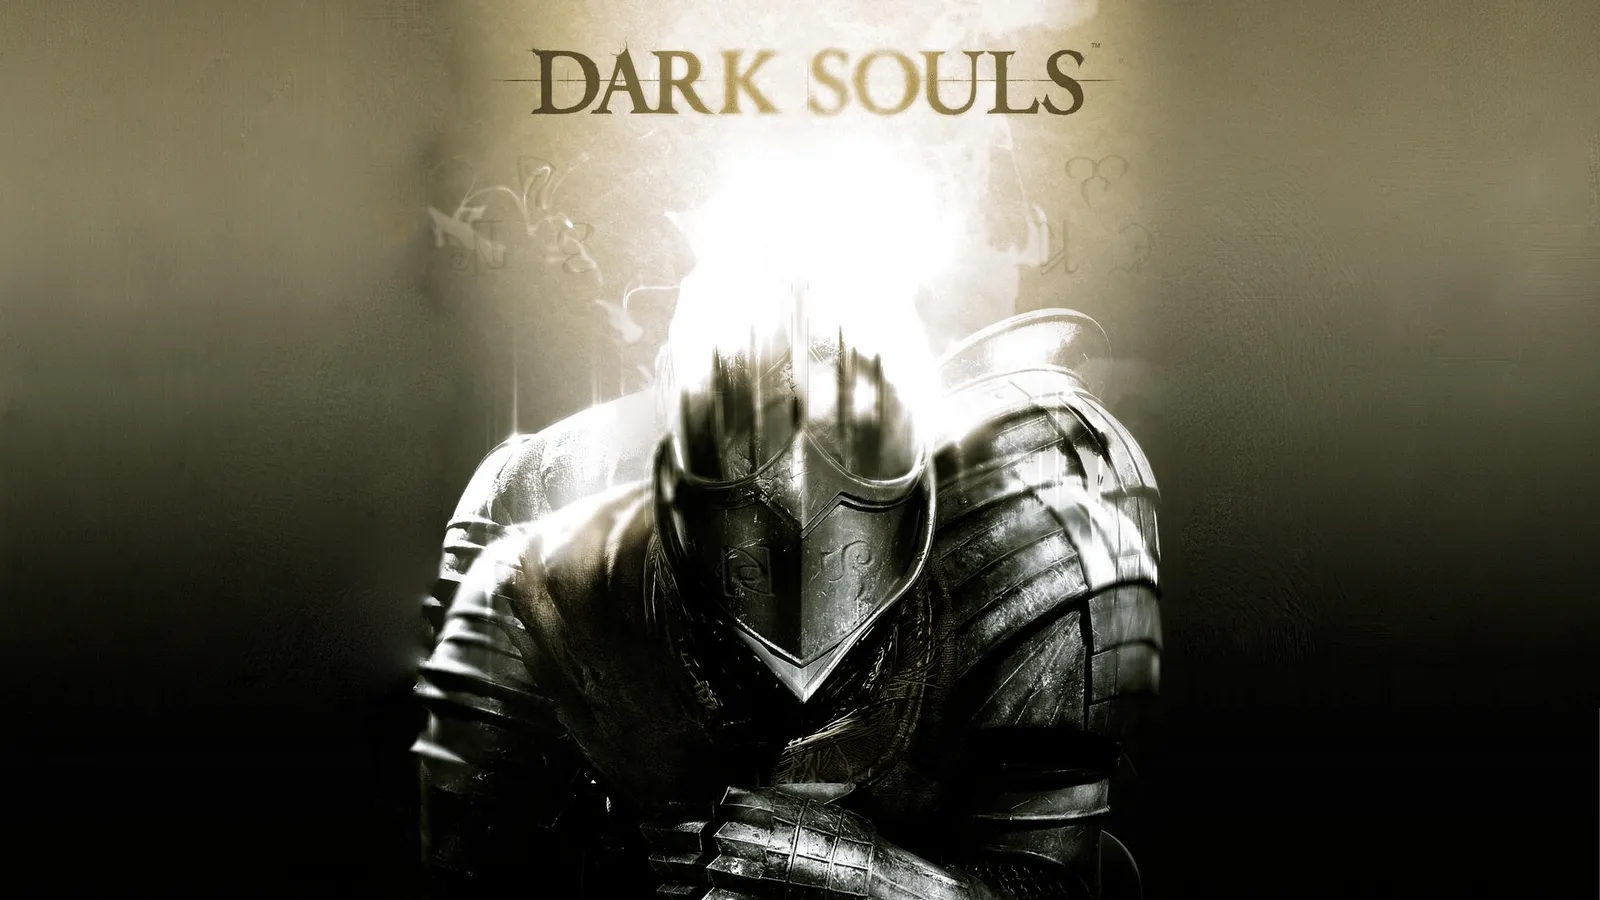 Free download wallpapers de dark souls en hd dark souls es un juego para ps3  lleno [1600x900] for your Desktop, Mobile & Tablet | Explore 43+ Dark Souls  3 Live Wallpaper |